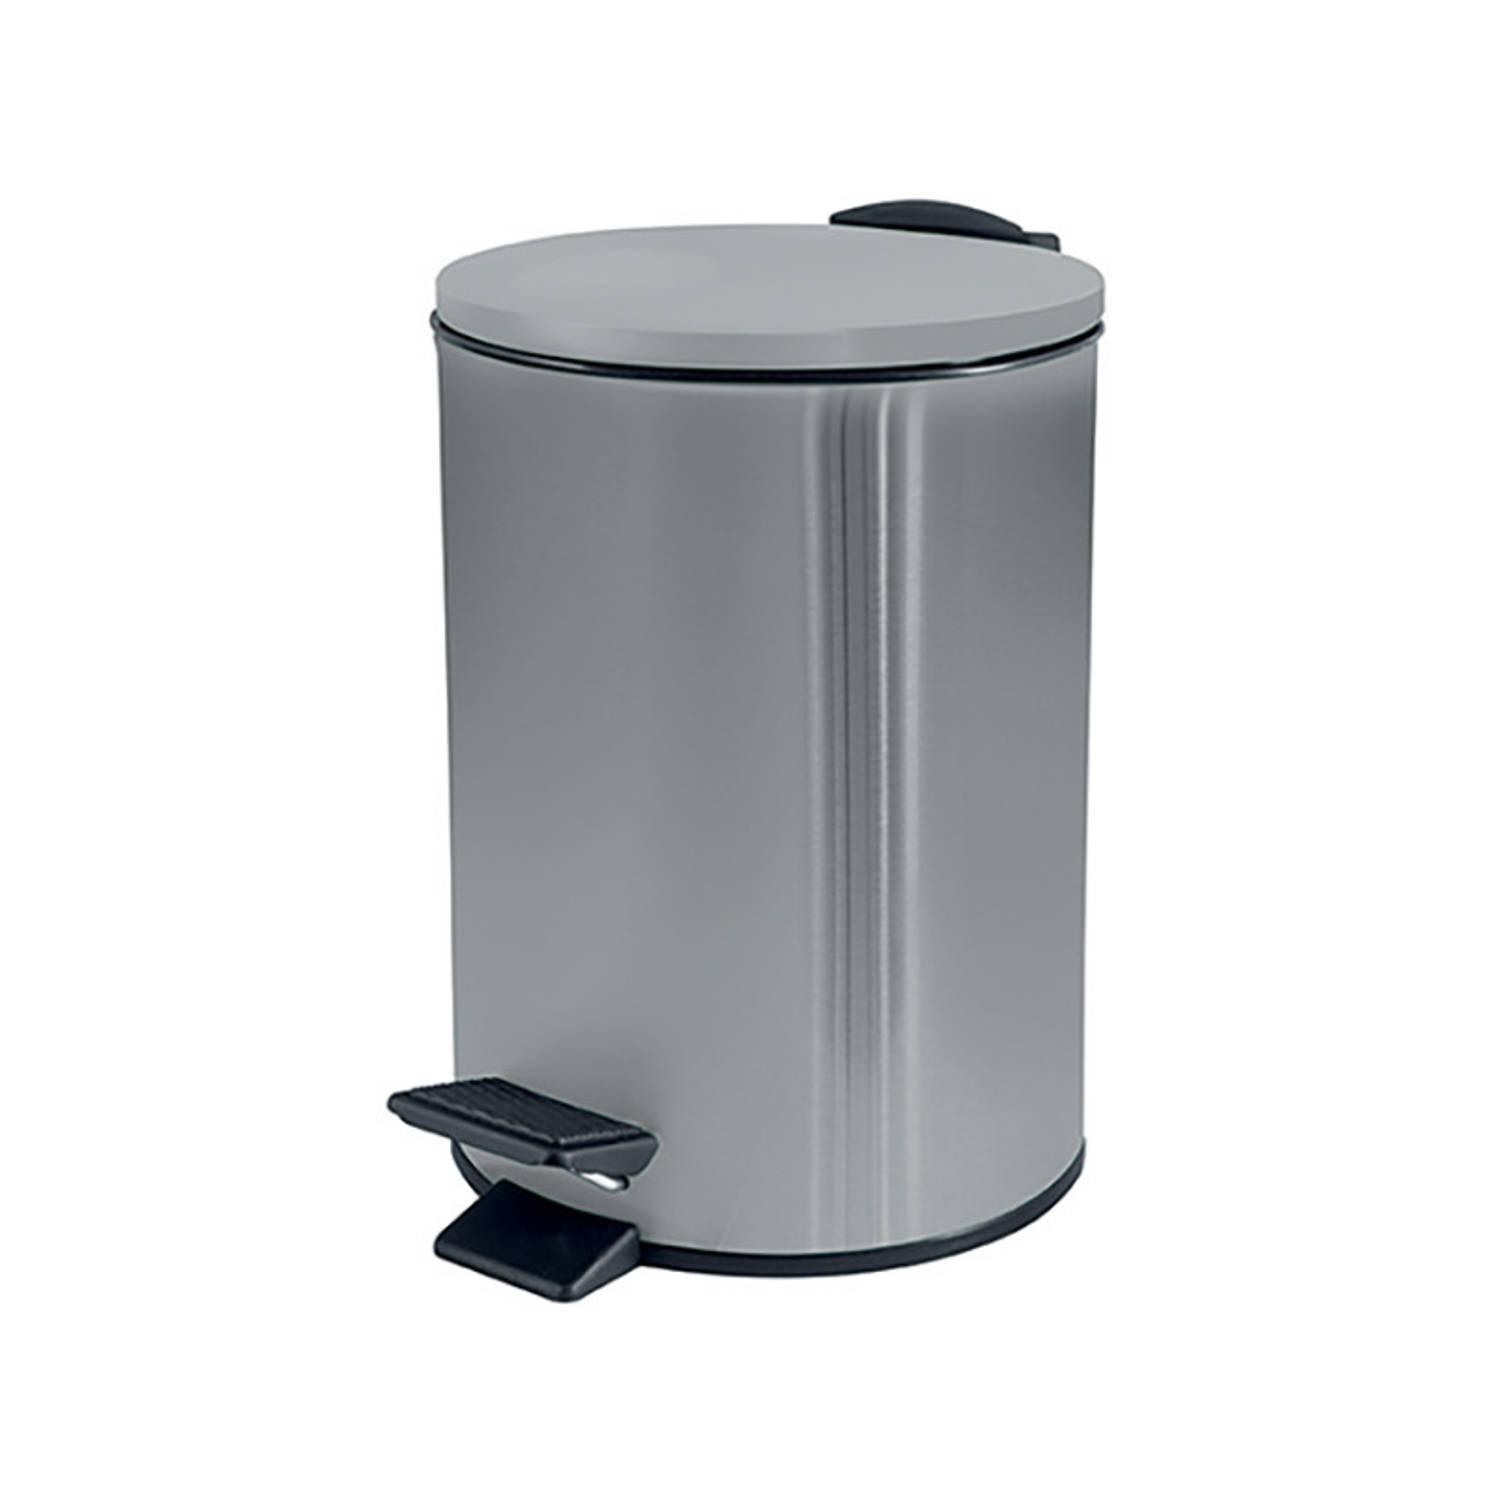 Spirella Pedaalemmer Cannes - zilver - 3 liter - metaal - L17 x H25 cm - soft-close - toilet/badkamer